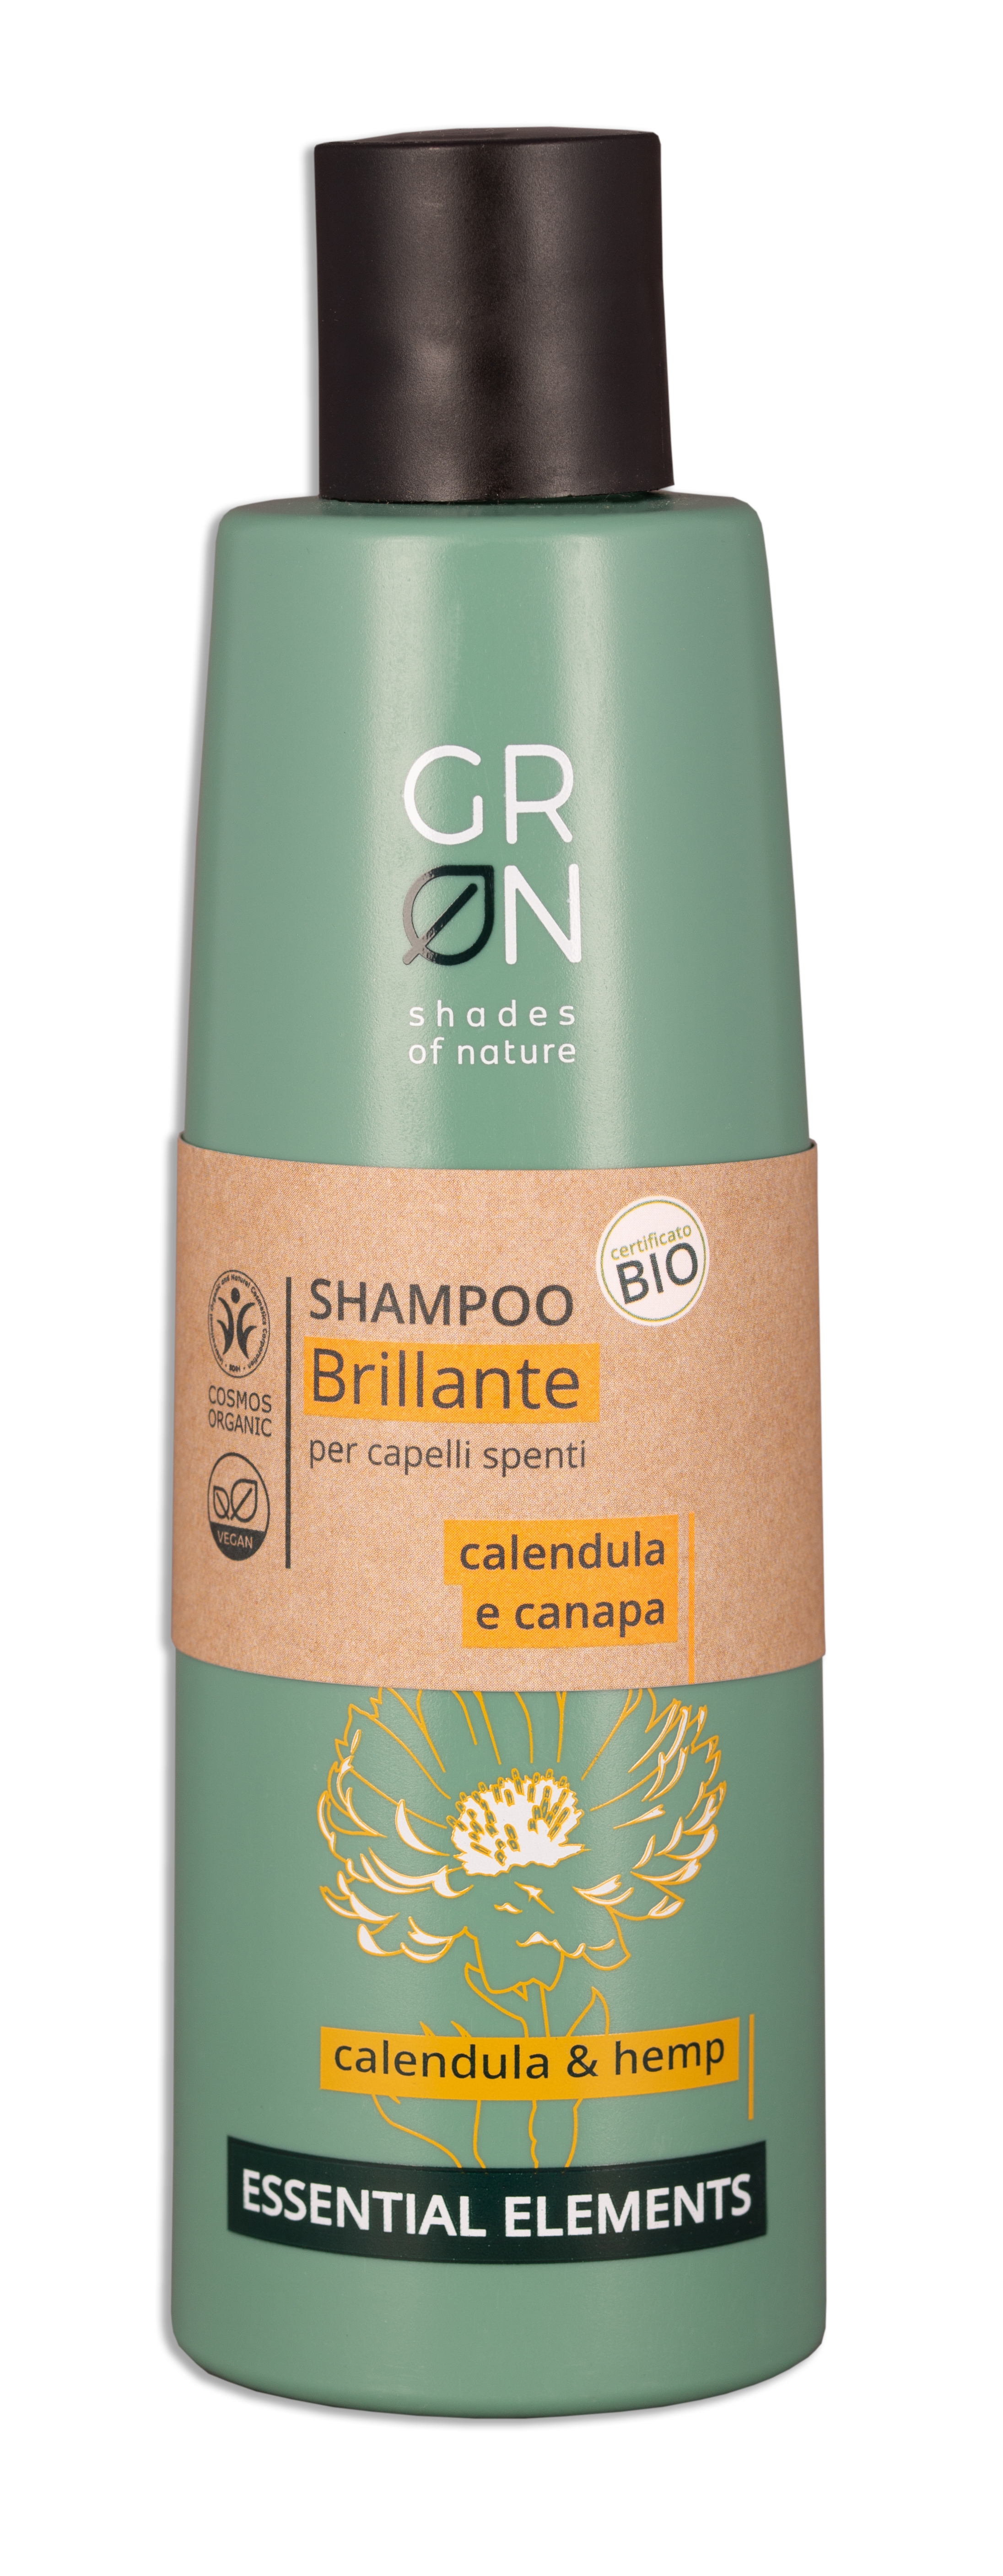 Essential elements - shampoo brillante calendula e canapa Grn shades of nature